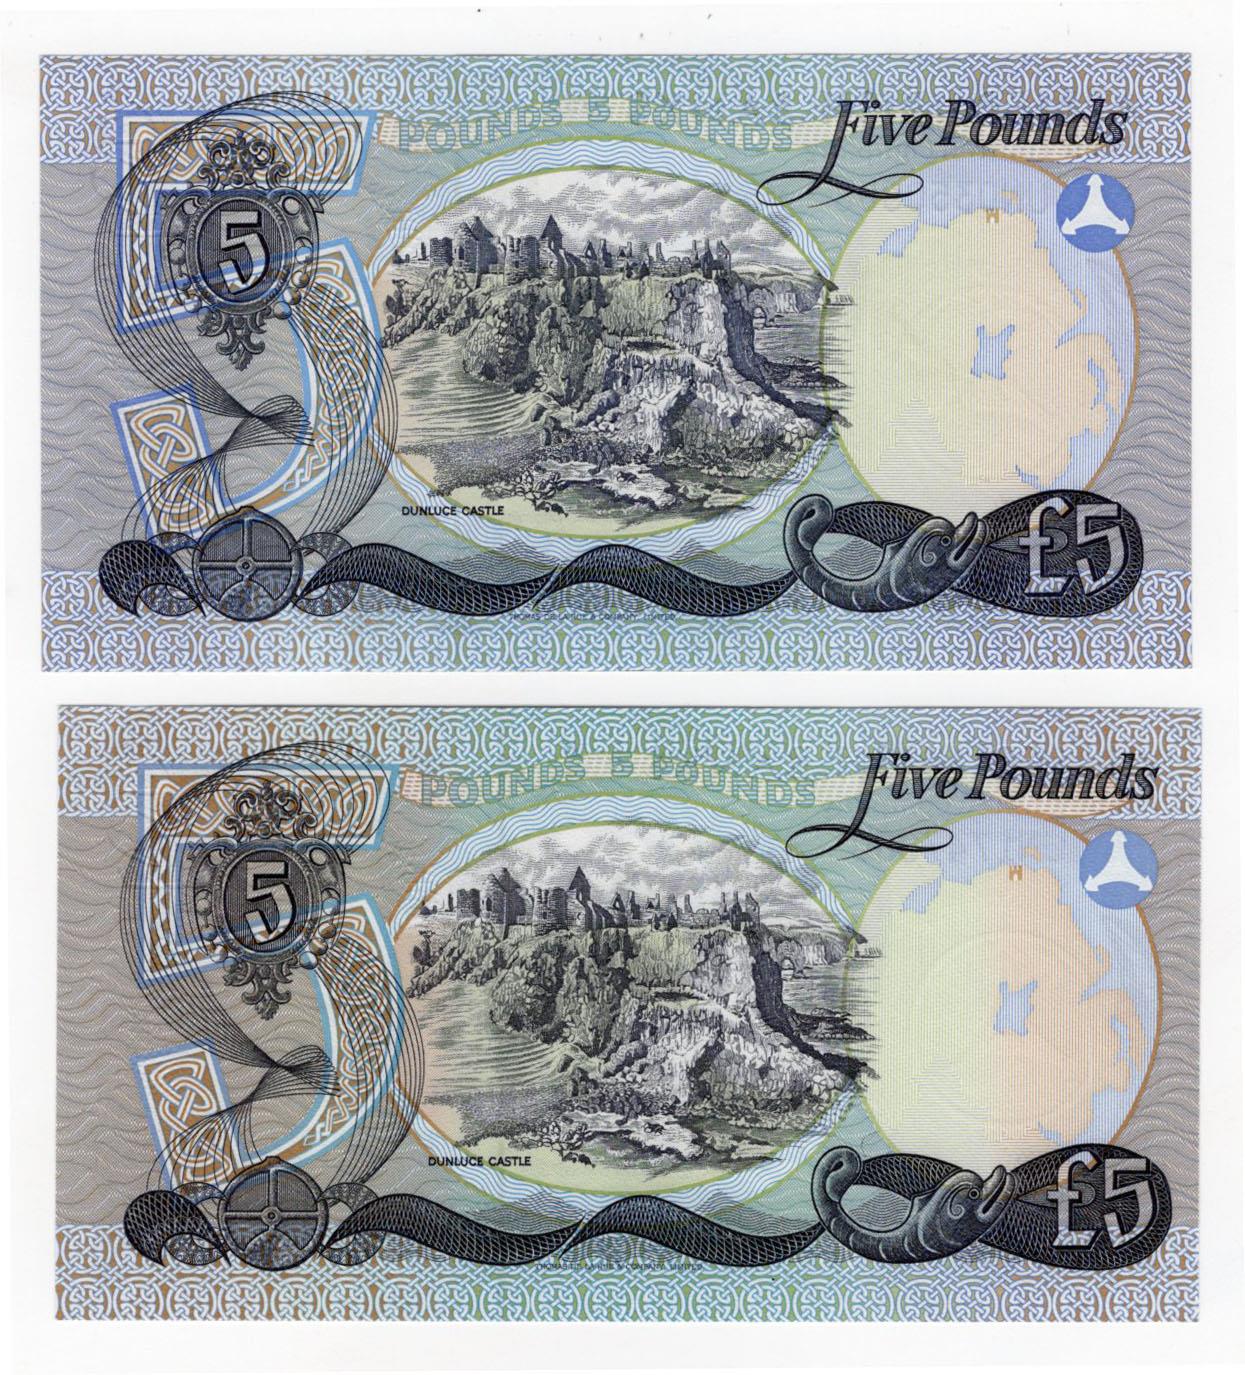 Northern Ireland, Allied Irish Banks (2), 5 Pounds dated 1st January 1987, signed G.B. Scanlon, - Image 2 of 2